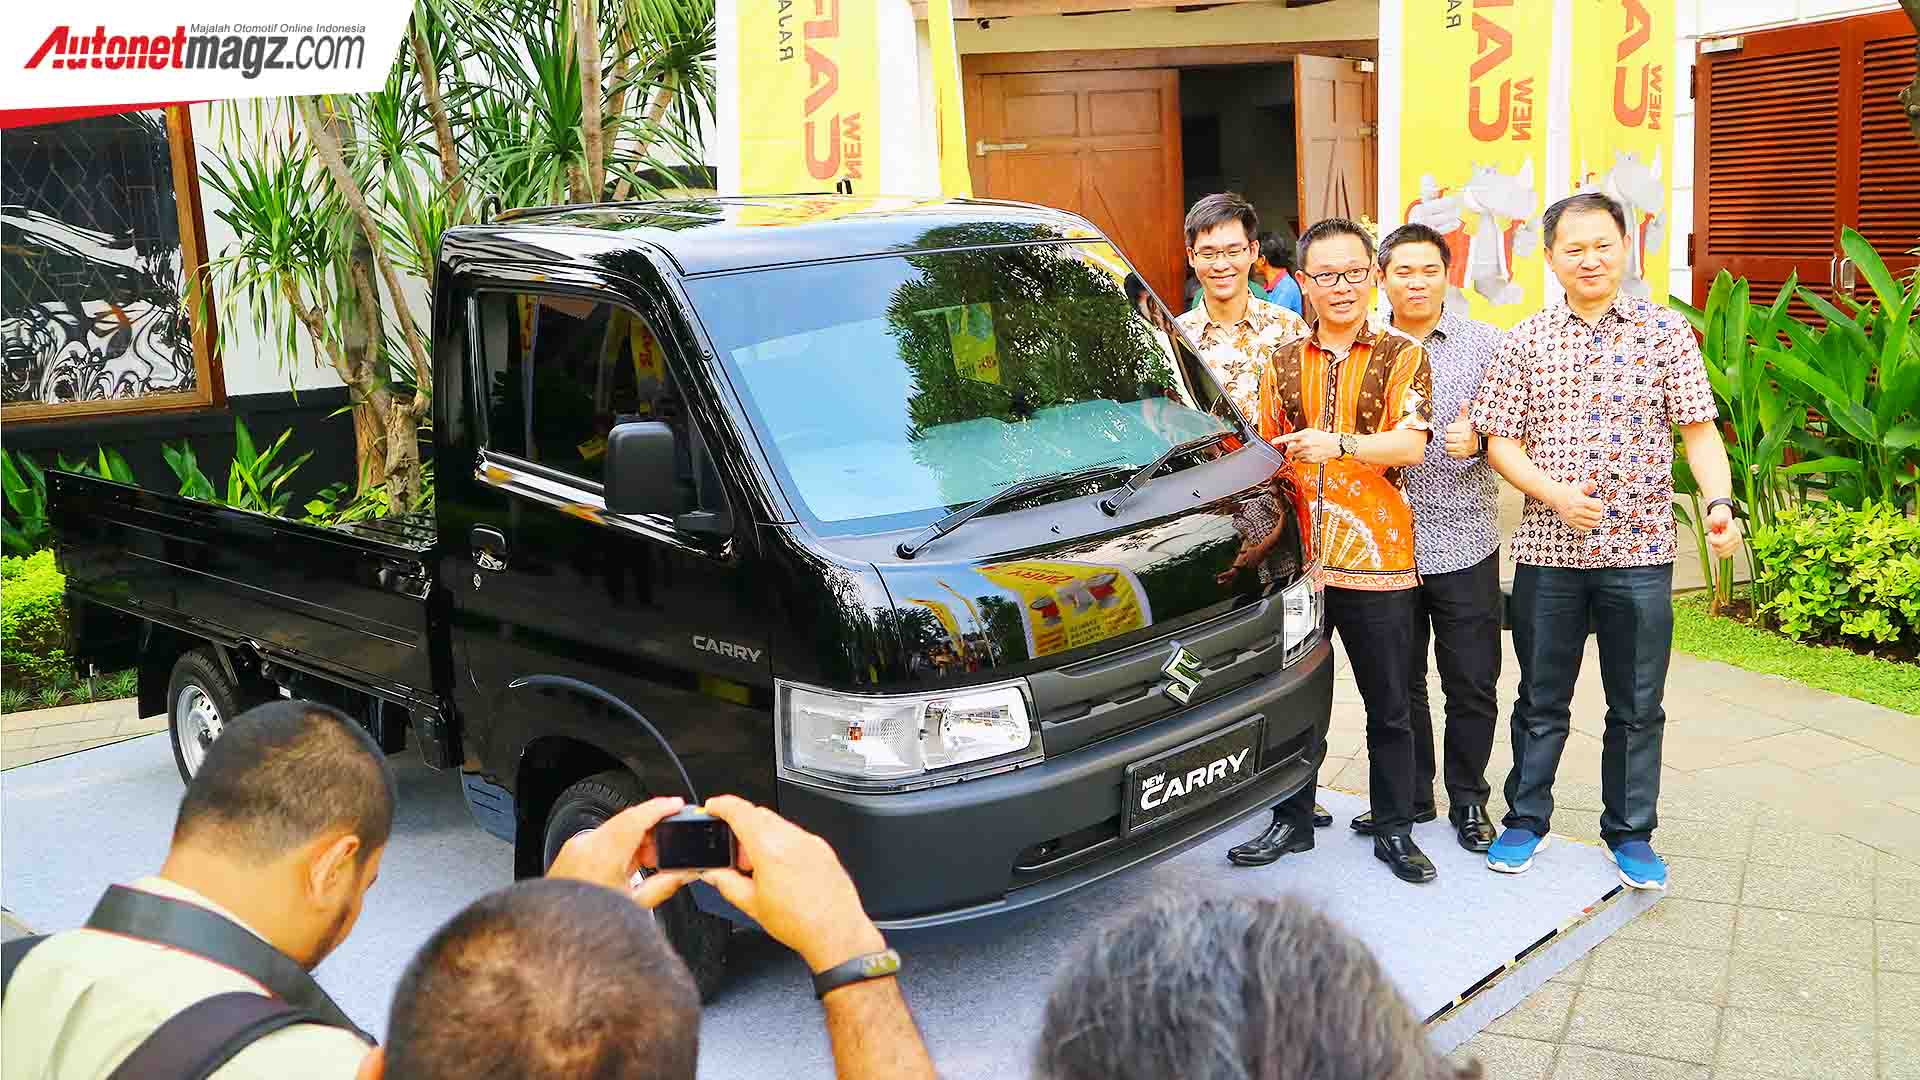 Berita, Harga All New Suzuki Carry Pickup Surabaya: Gerak Cepat, All New Suzuki Carry Juga Dirilis di Surabaya!